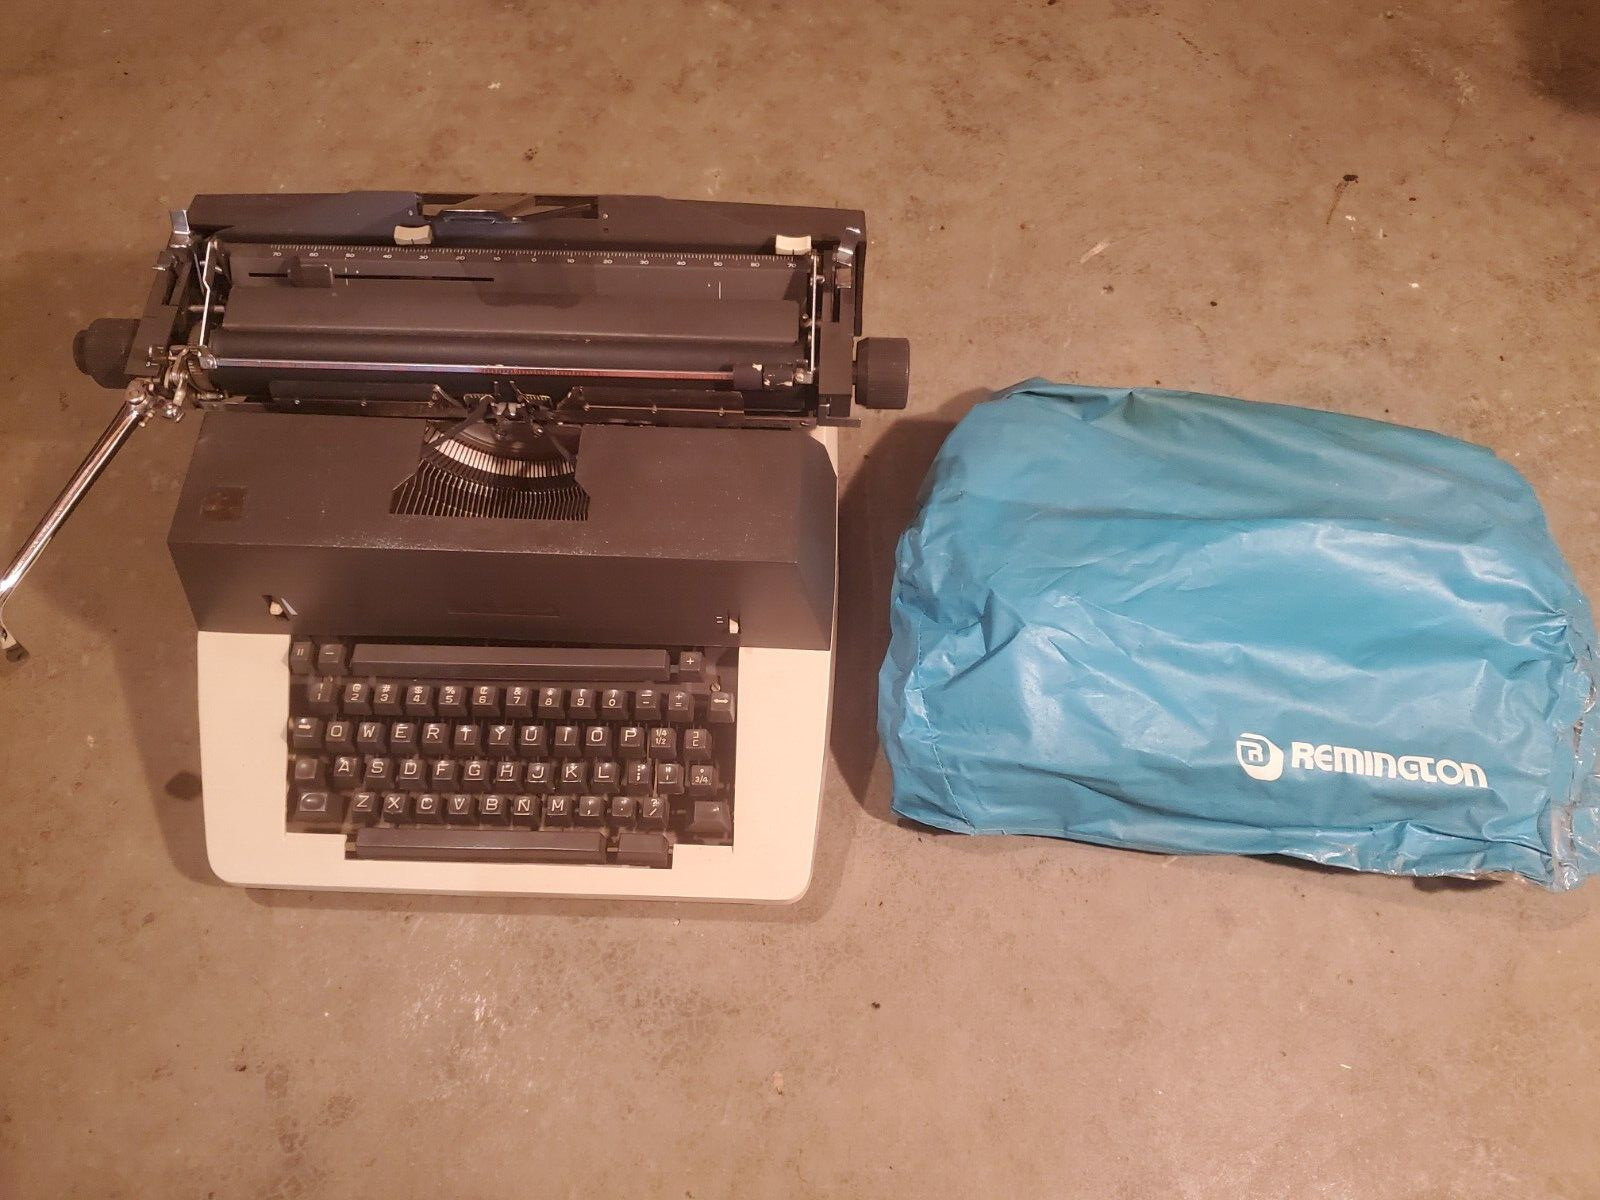 Vintage Sperry Rand Remington Portable Typewriter